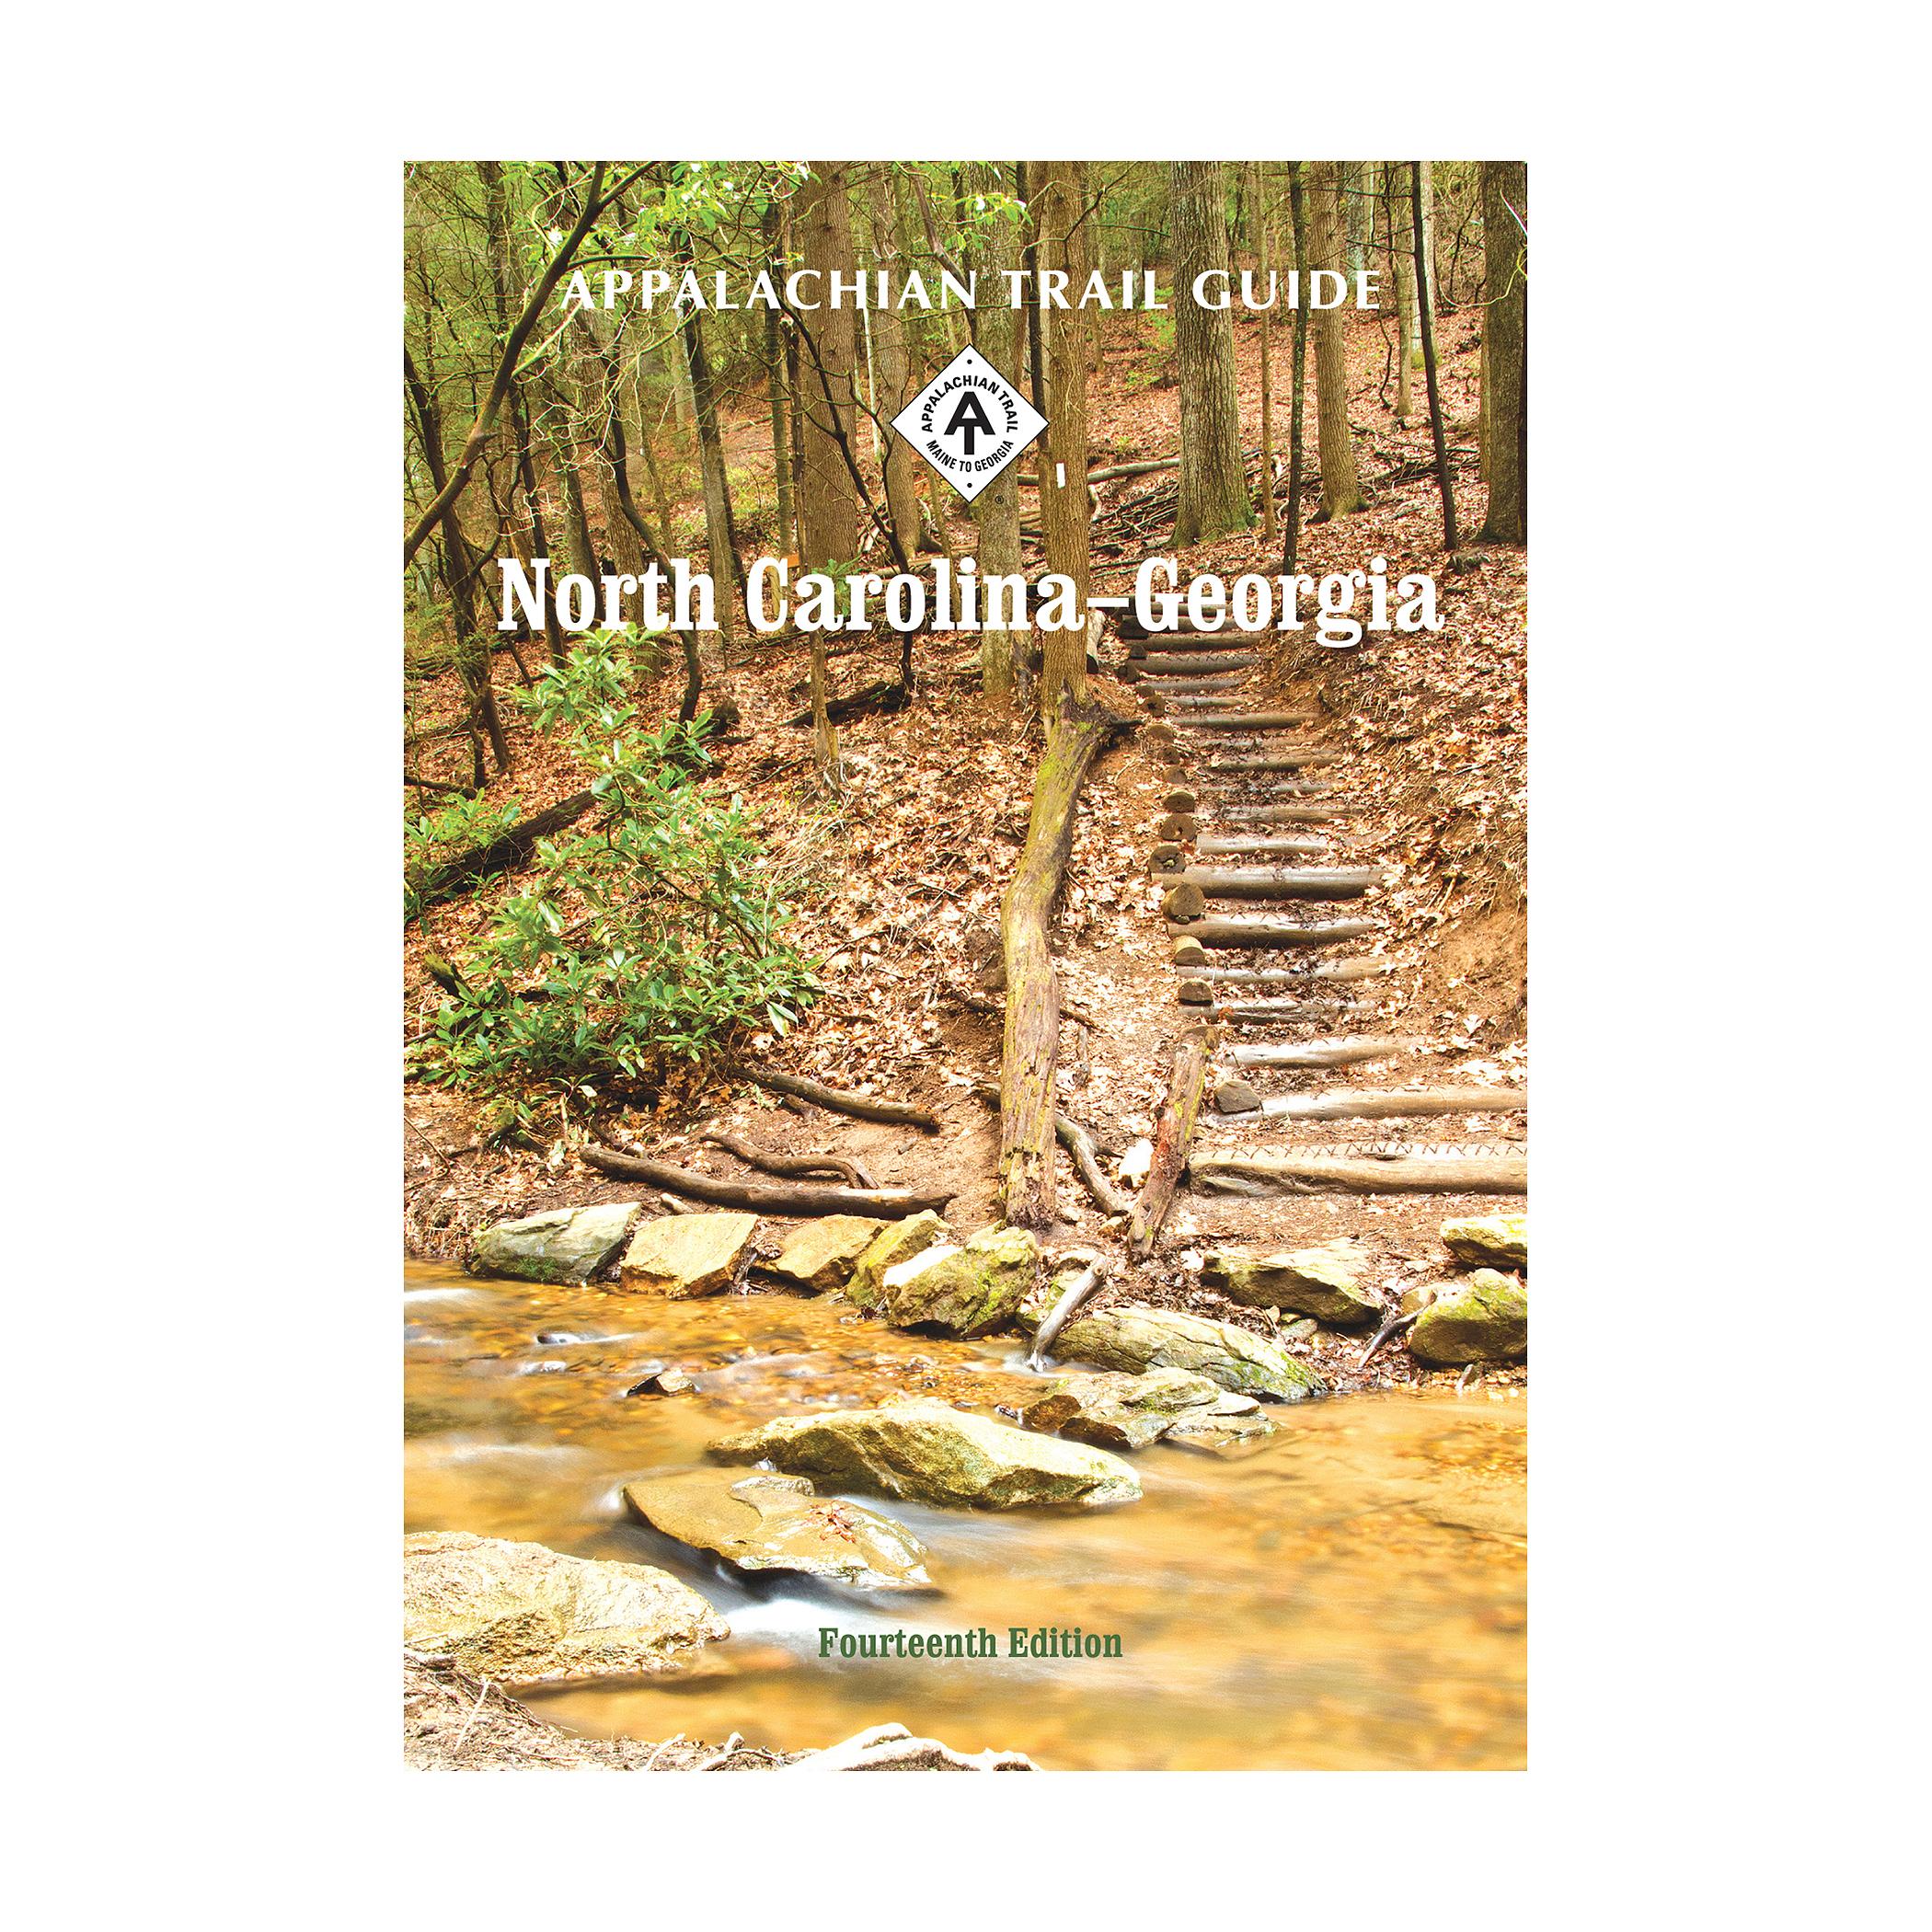  Appalachian Trail Guide To North Carolina- Georgia